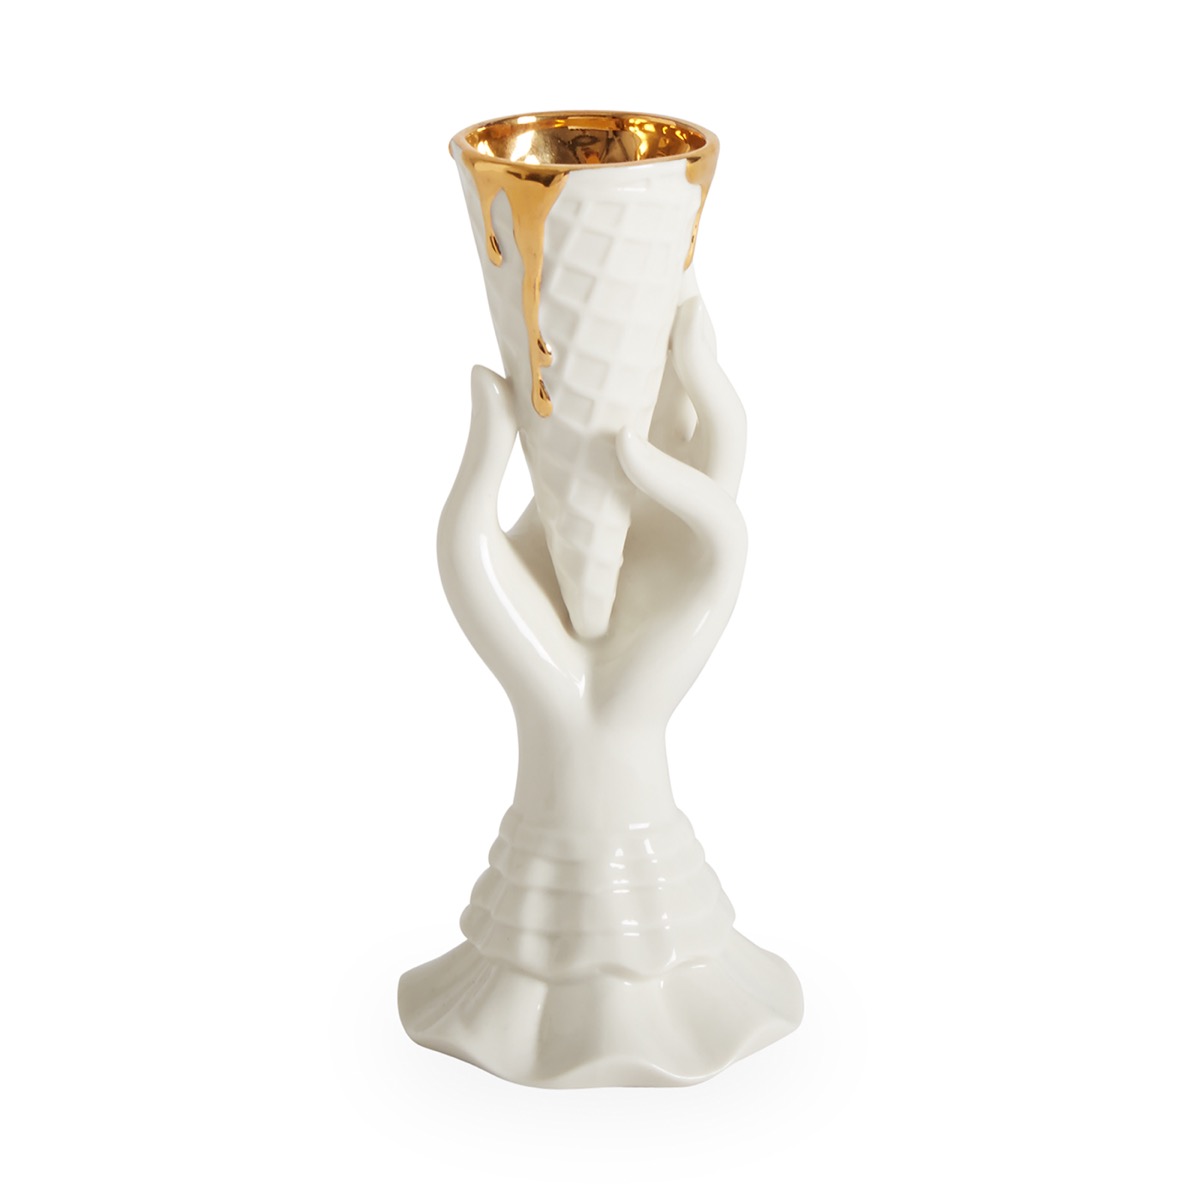 white ceramic hand holding white ice cream cone with gold interior, hanukkah gifts